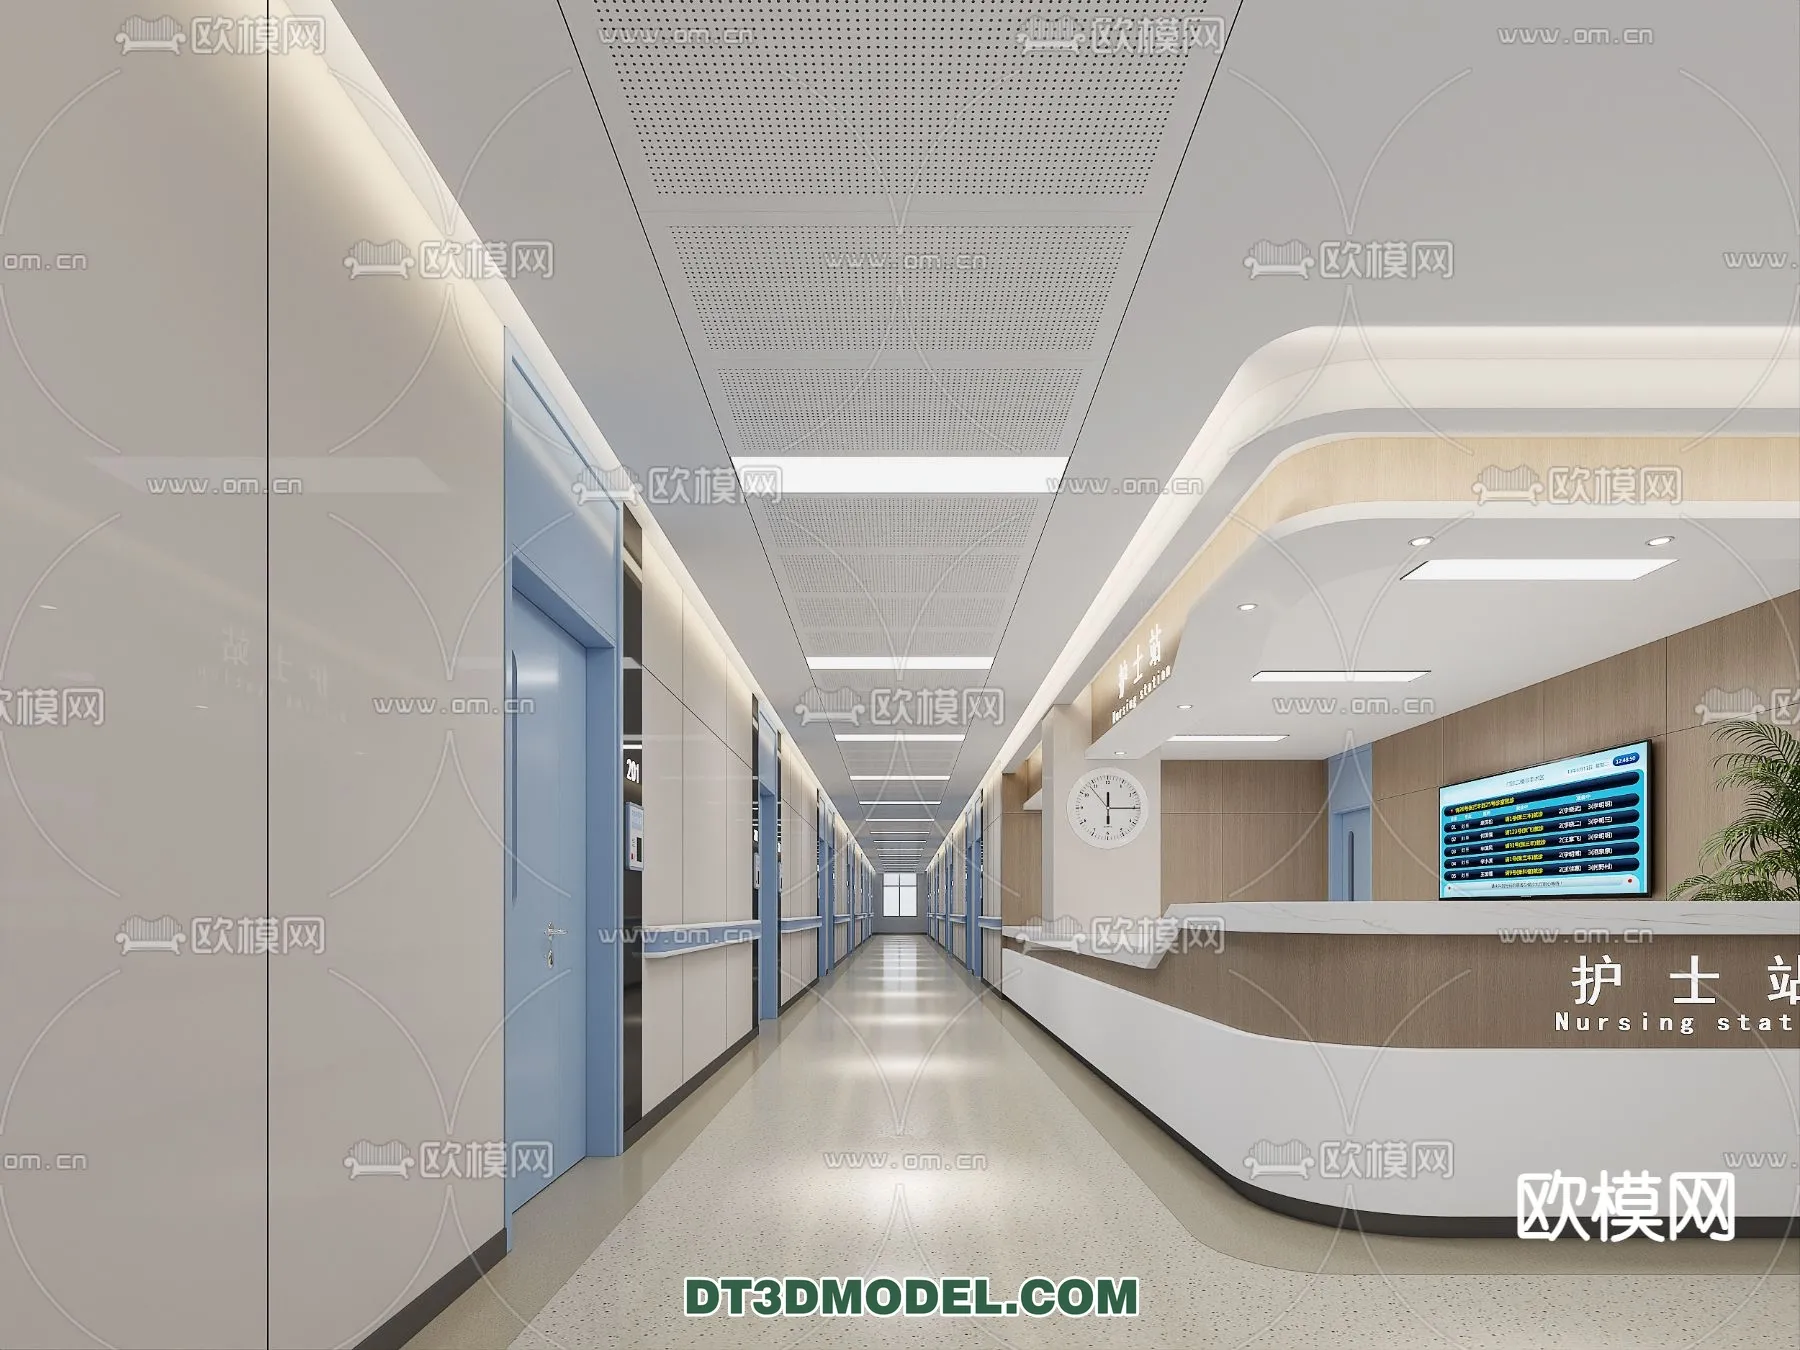 HOSPITAL 3D SCENES – MODERN – 0159